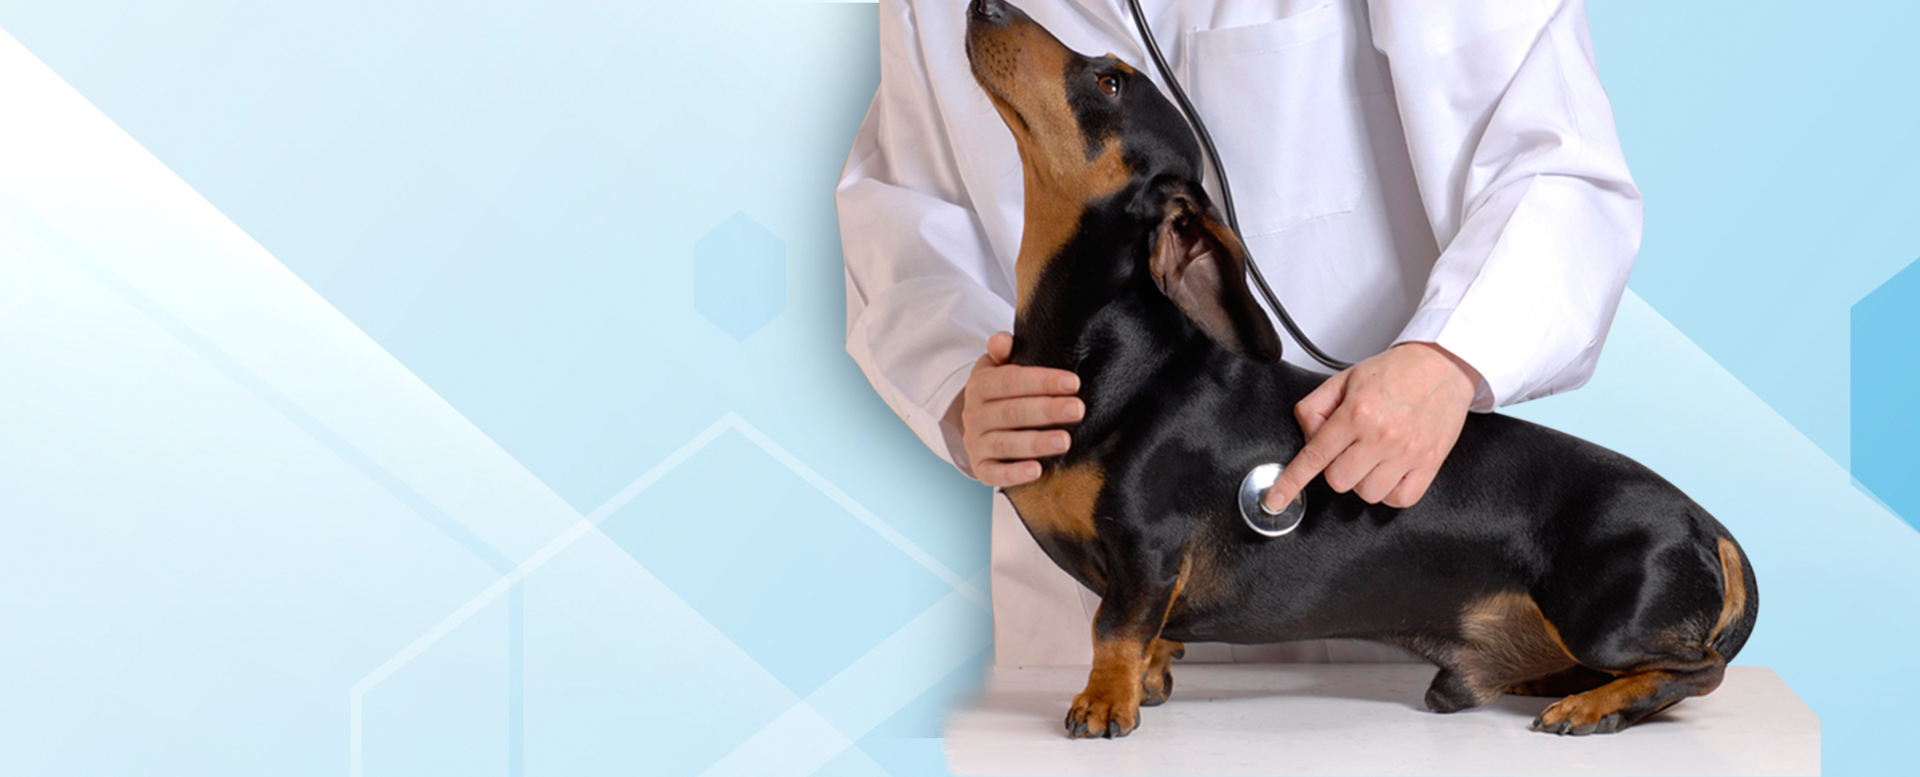 Medicina preventiva veterinaria | Centro Médico Veterinario Alivet 24 horas